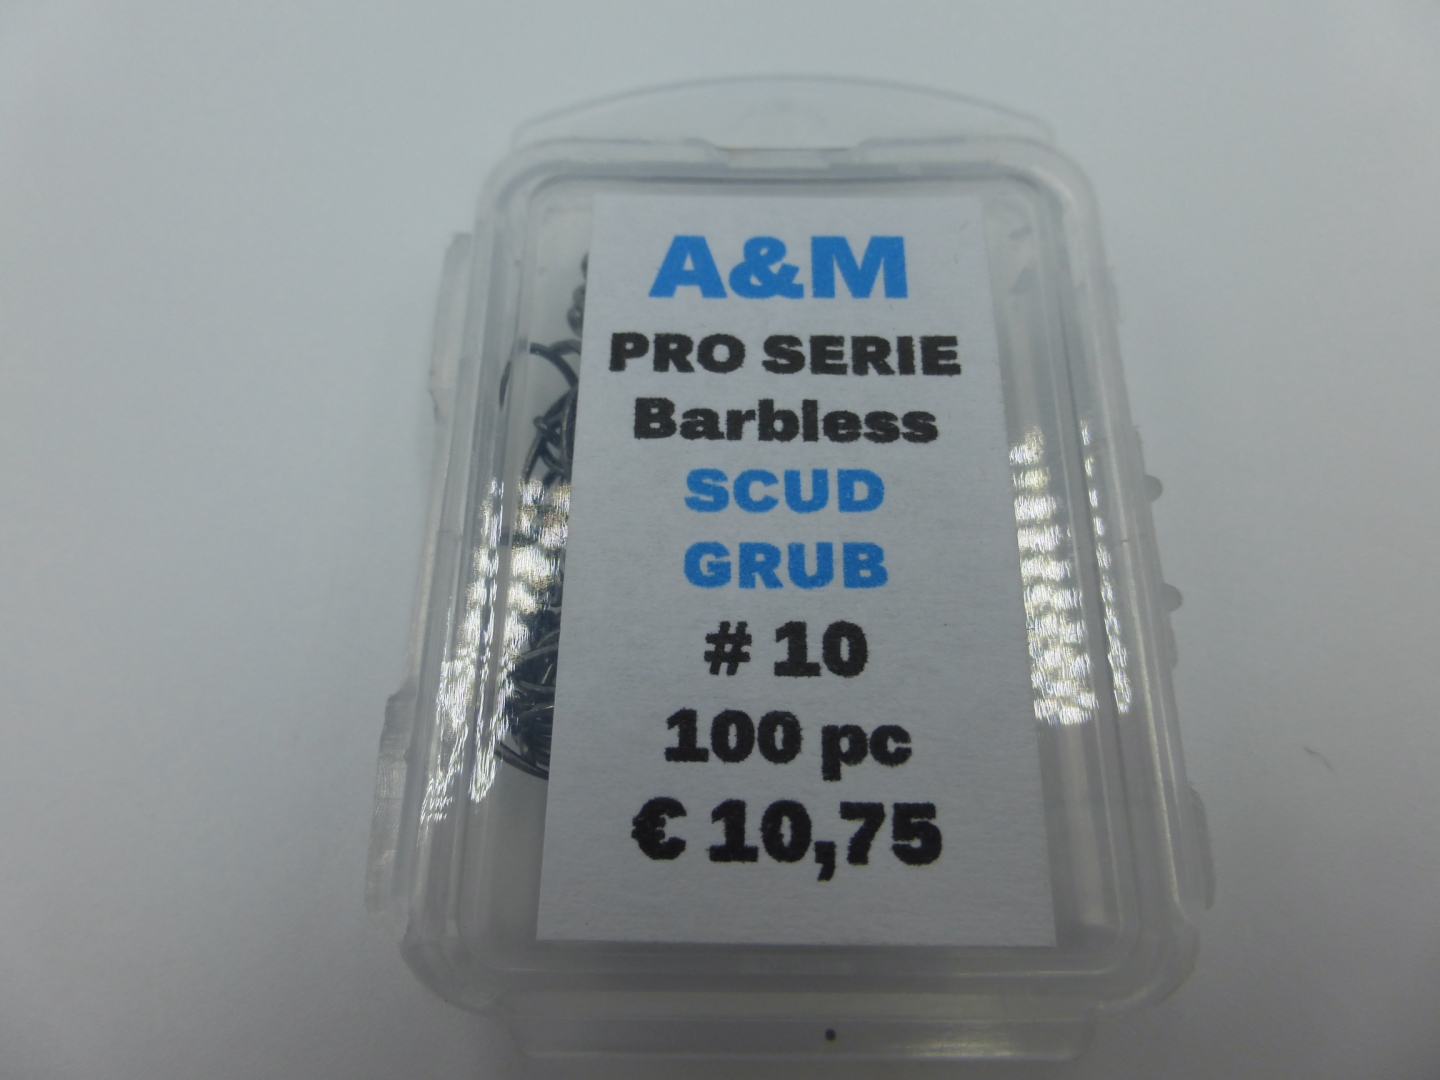 Scud/Grub Wide Gape Size 10 Pro Serie Barbless - 100 pc